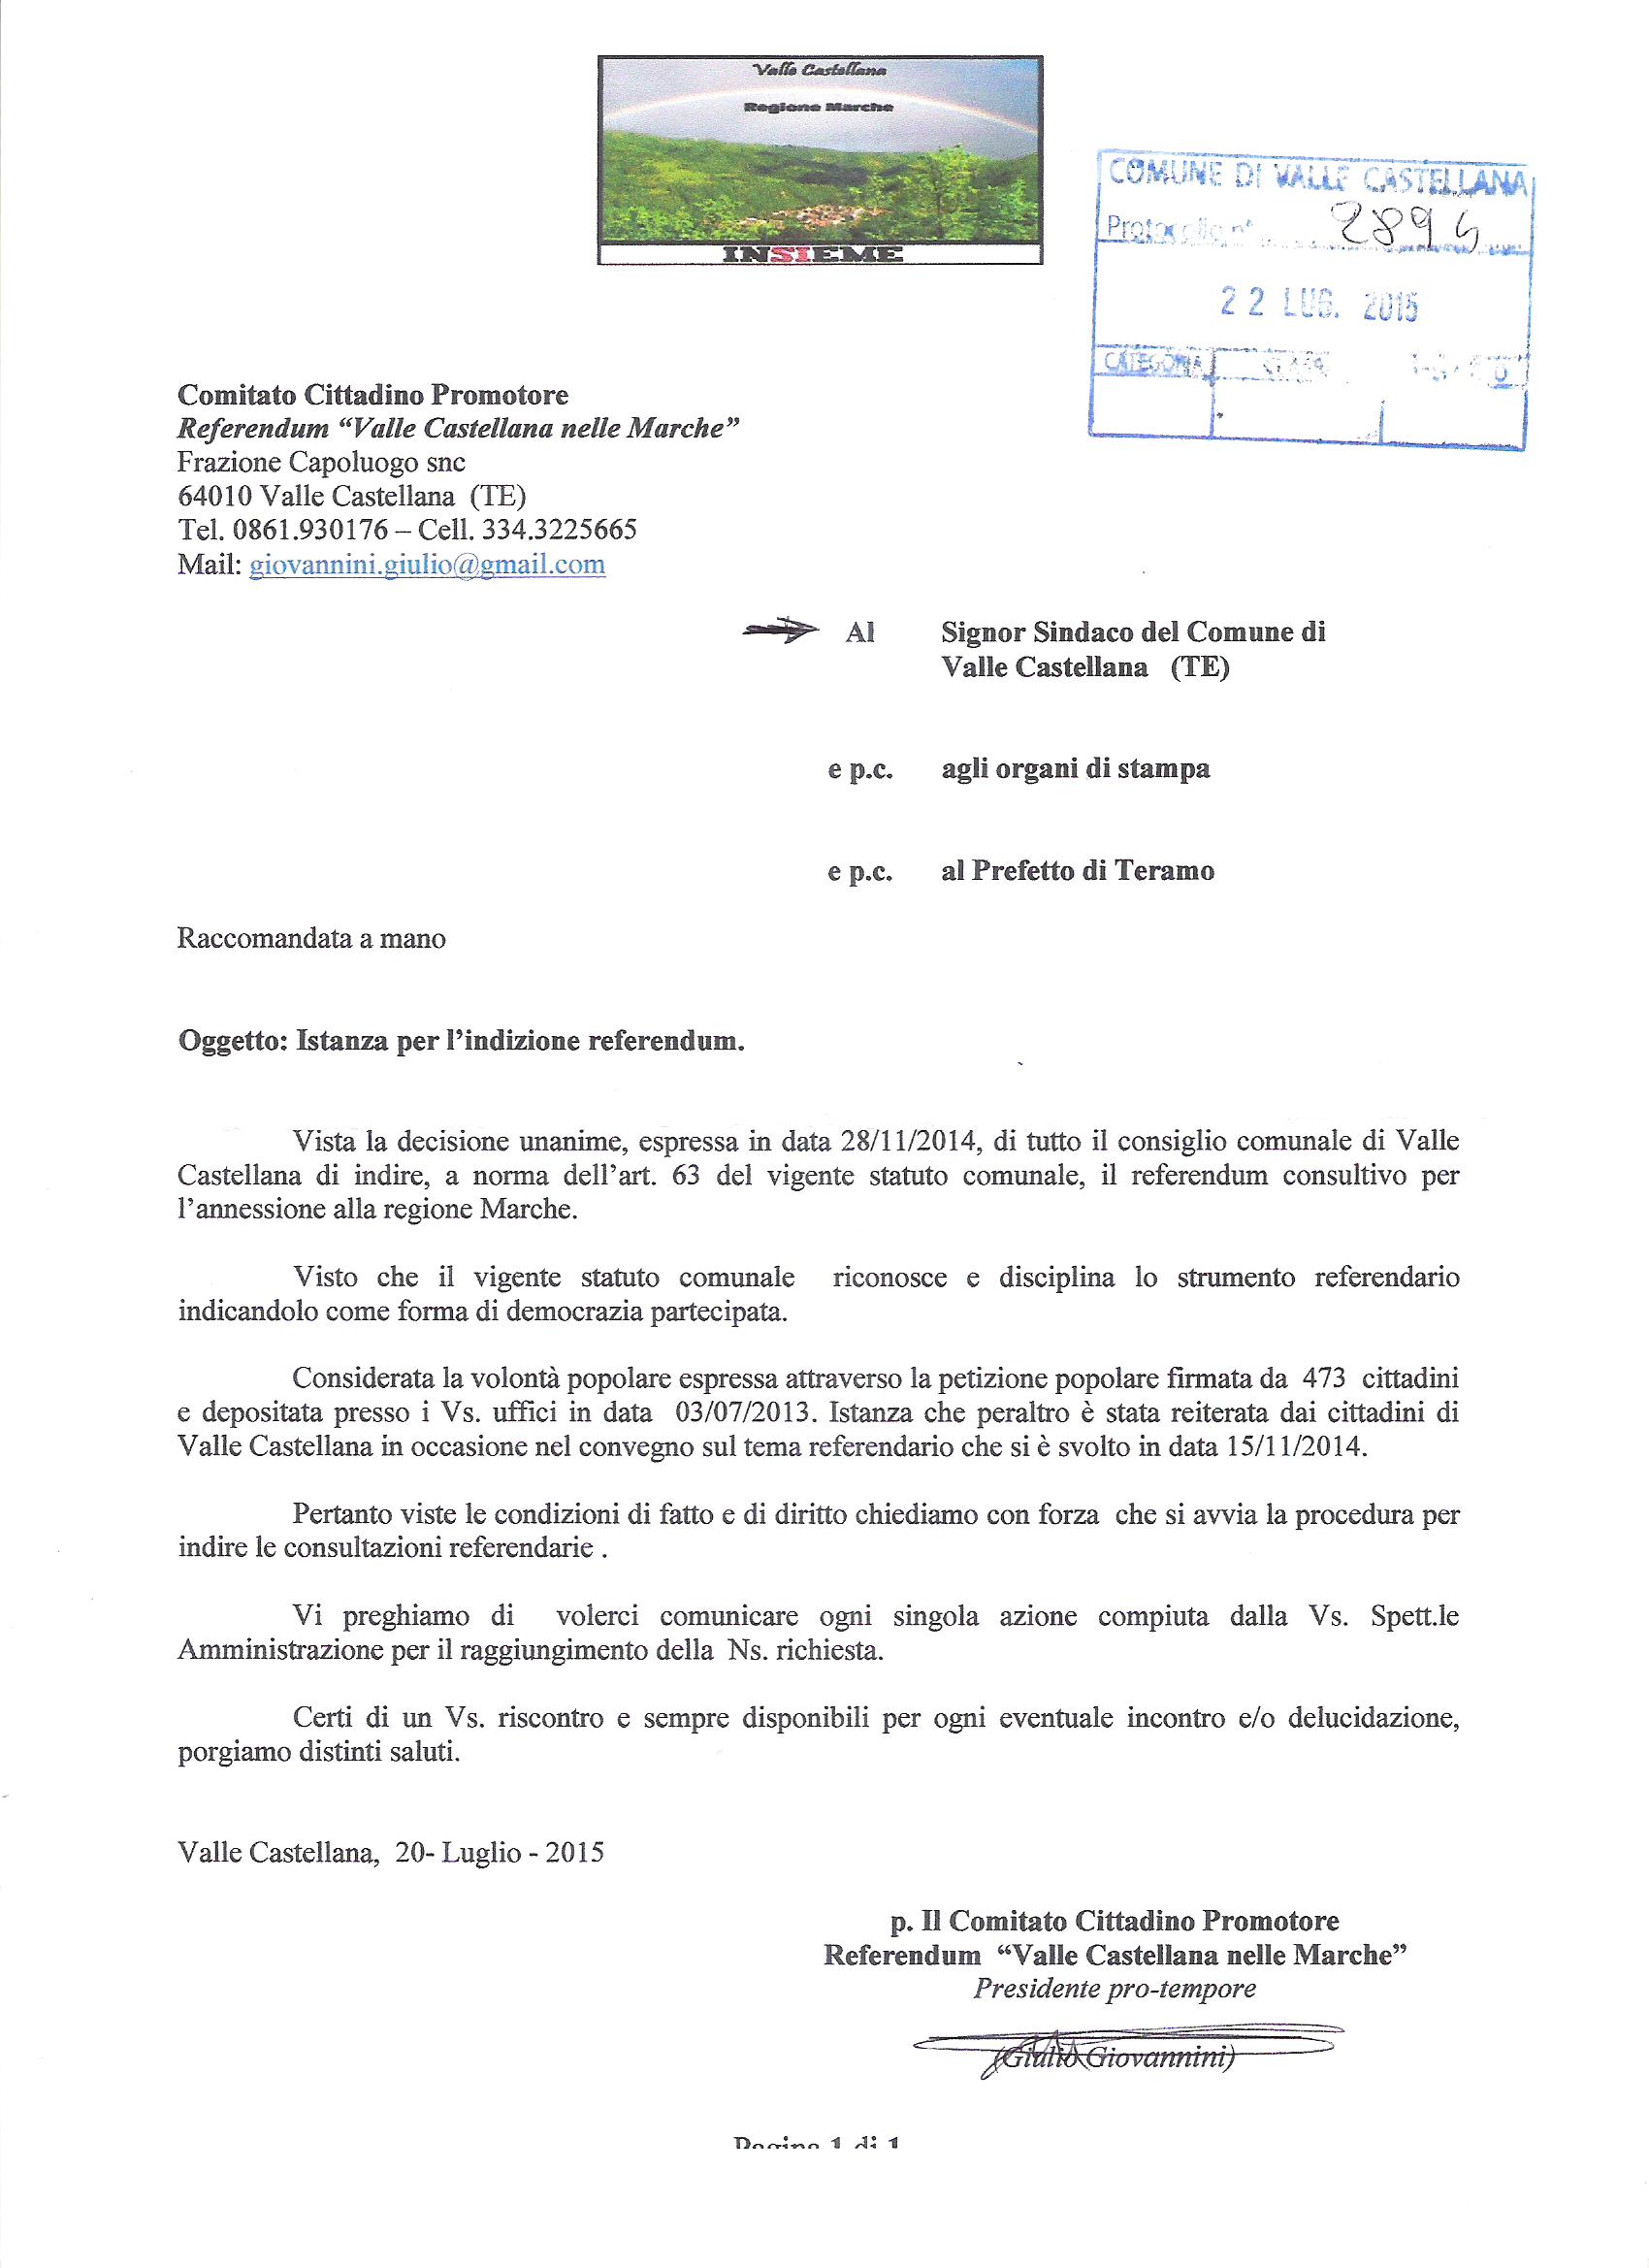 REFERENDUM Richiesta Istanza Induzione al Sindaco di Valle Castellana Del 22-07-2015